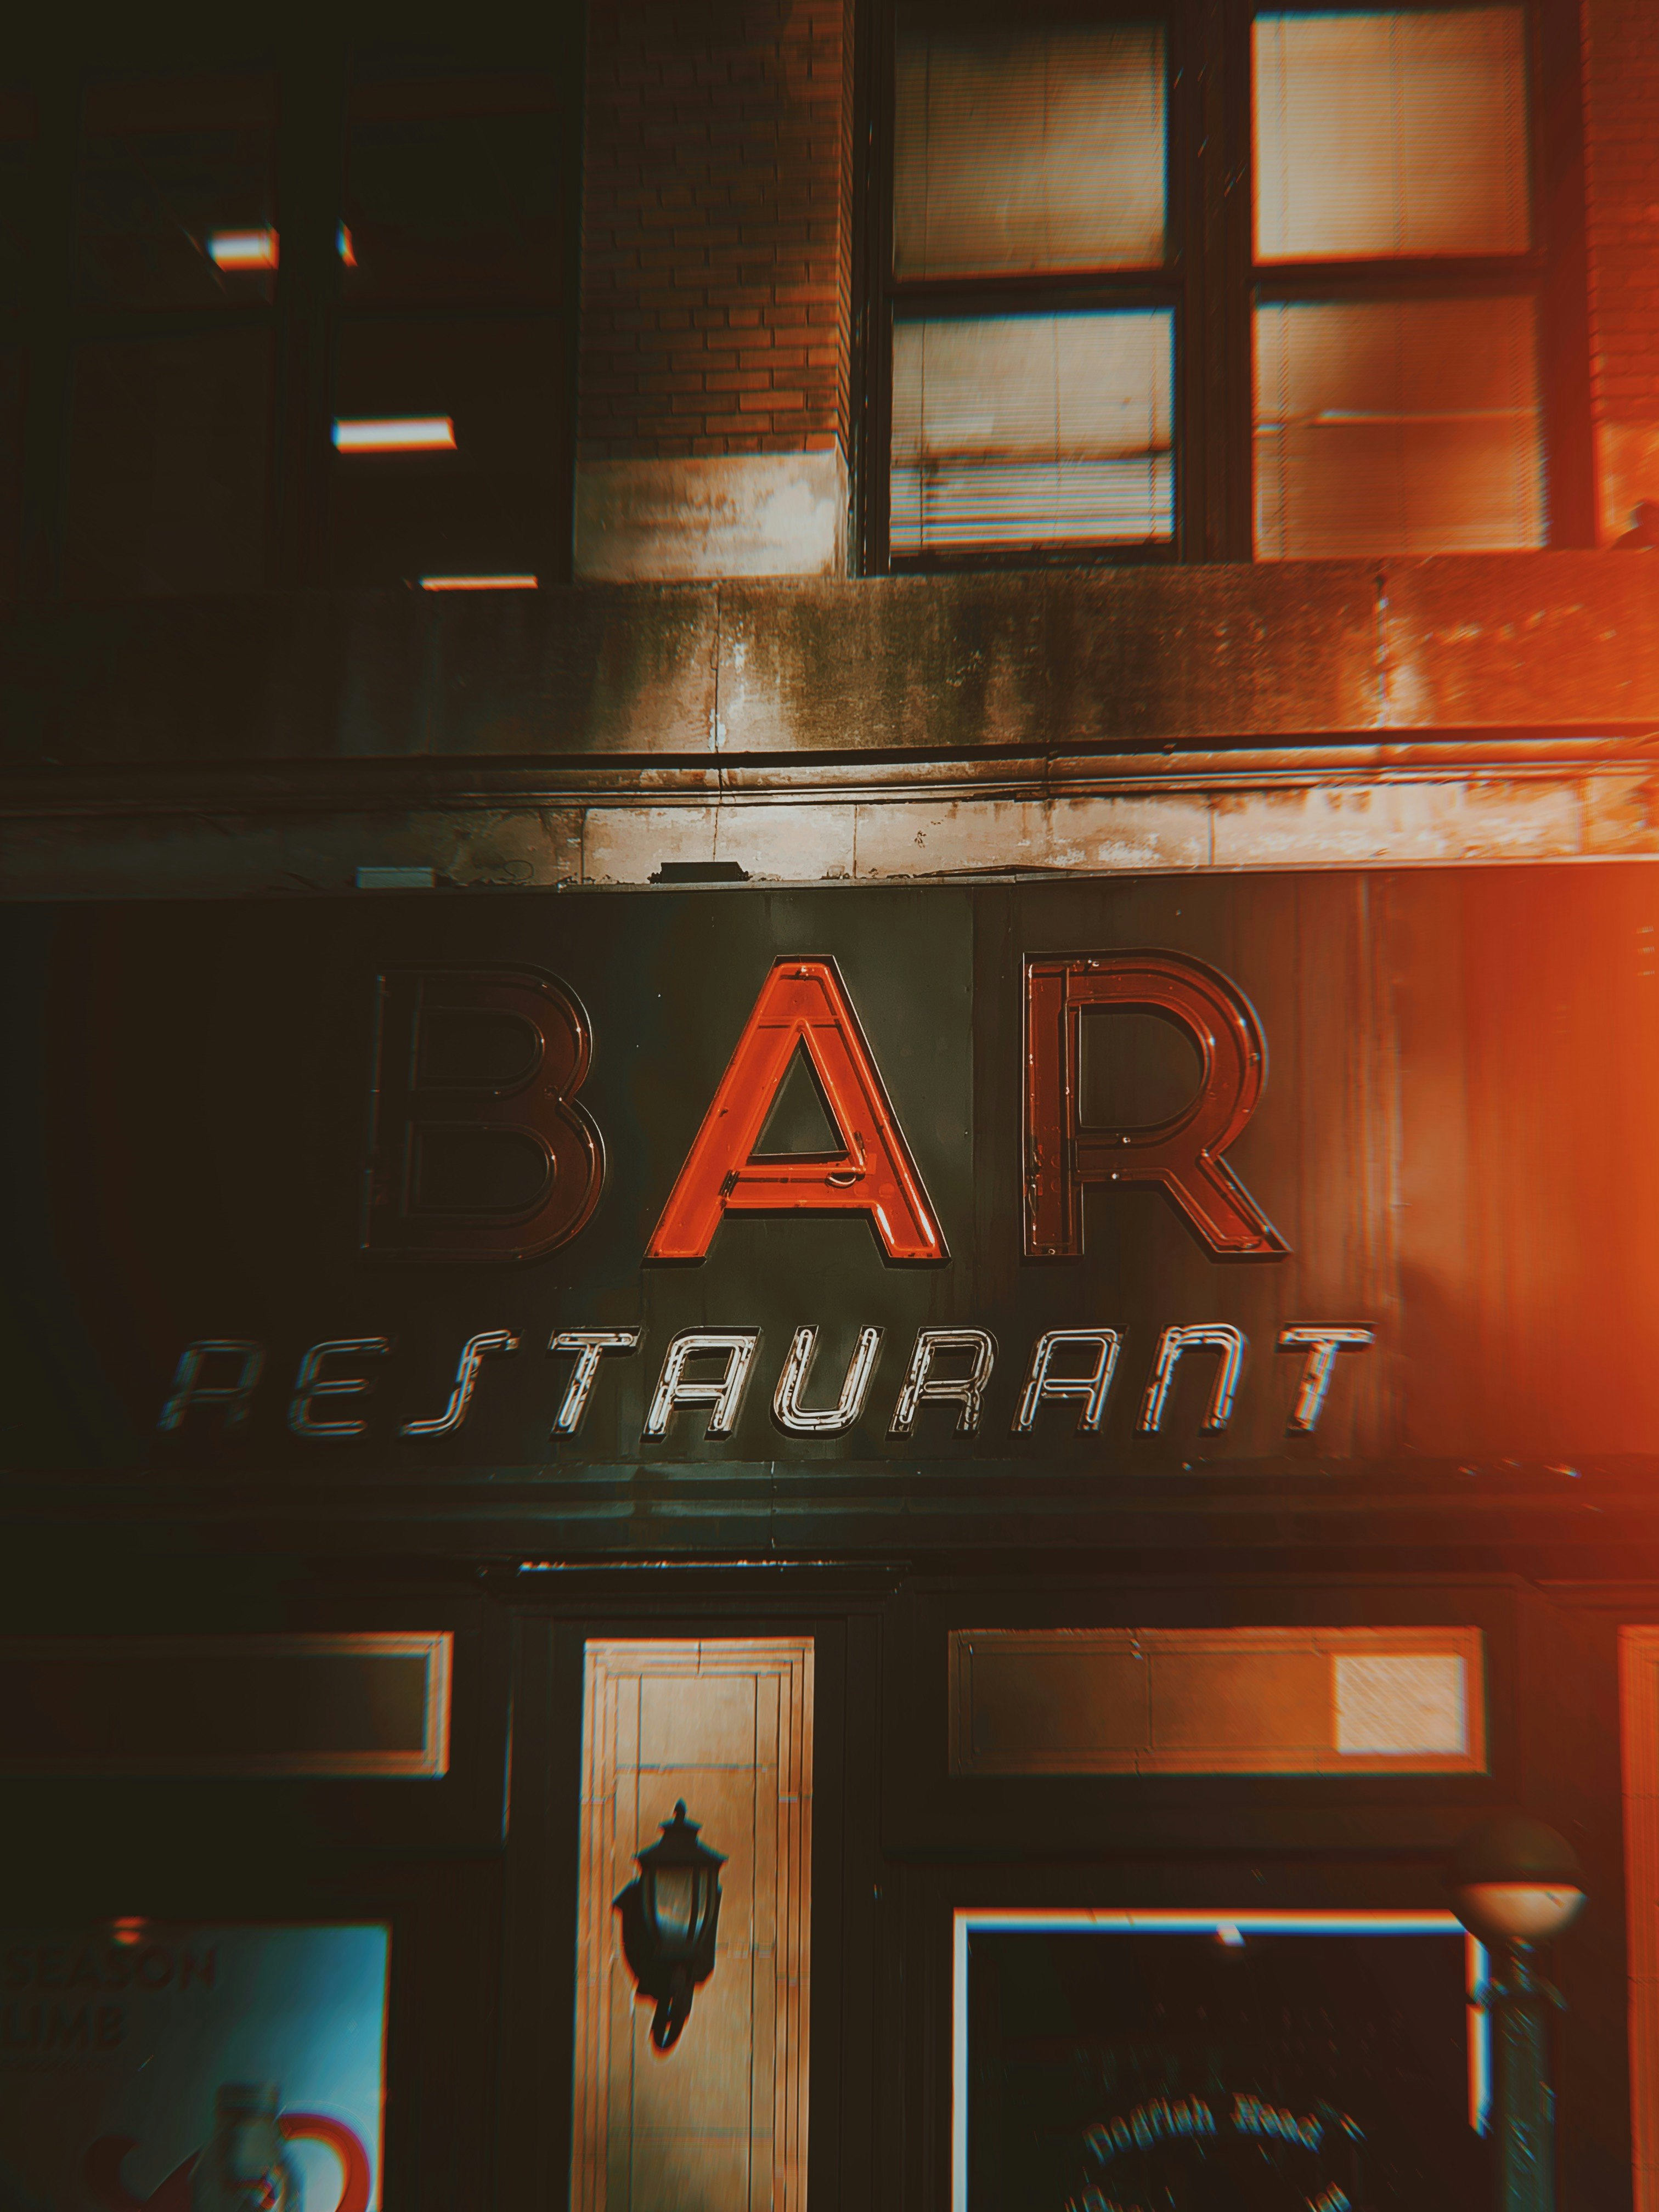 Bar Restaurant signage